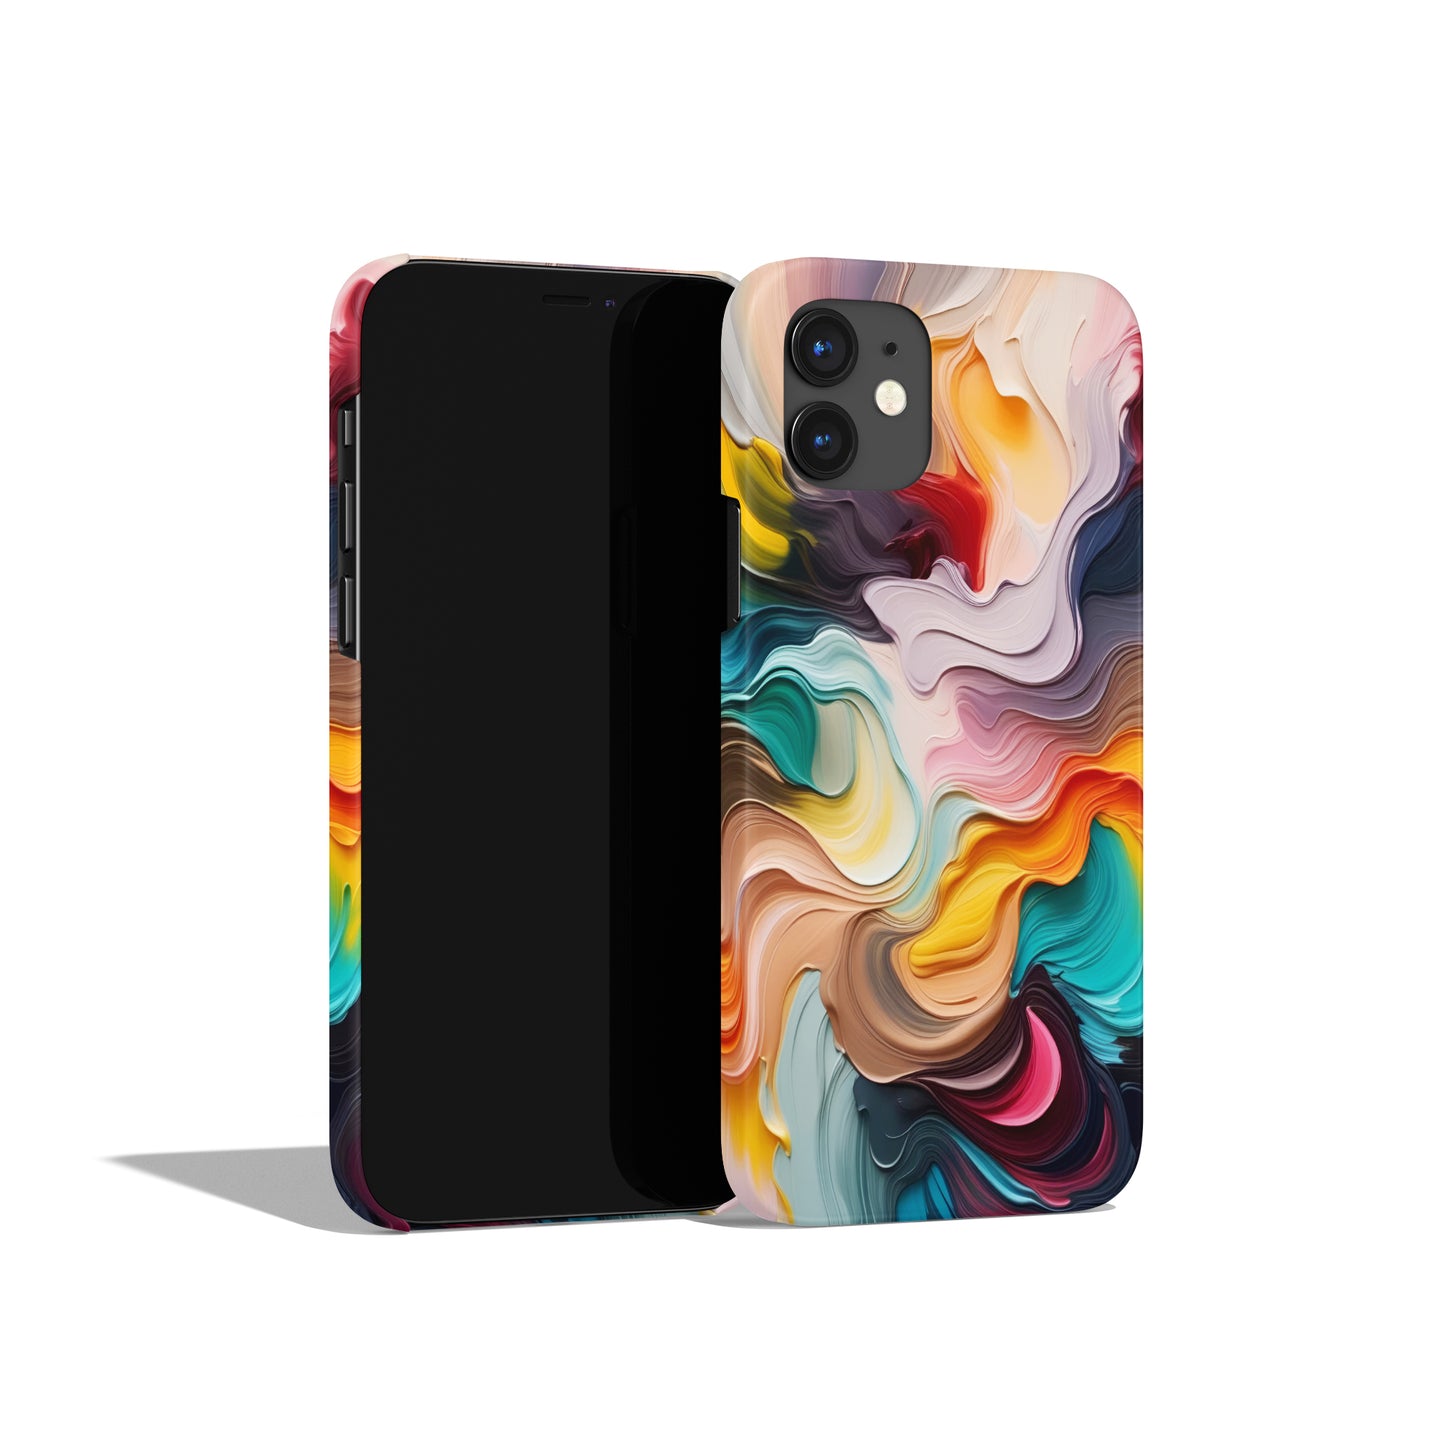 Colorful Liquid Painting iPhone Case